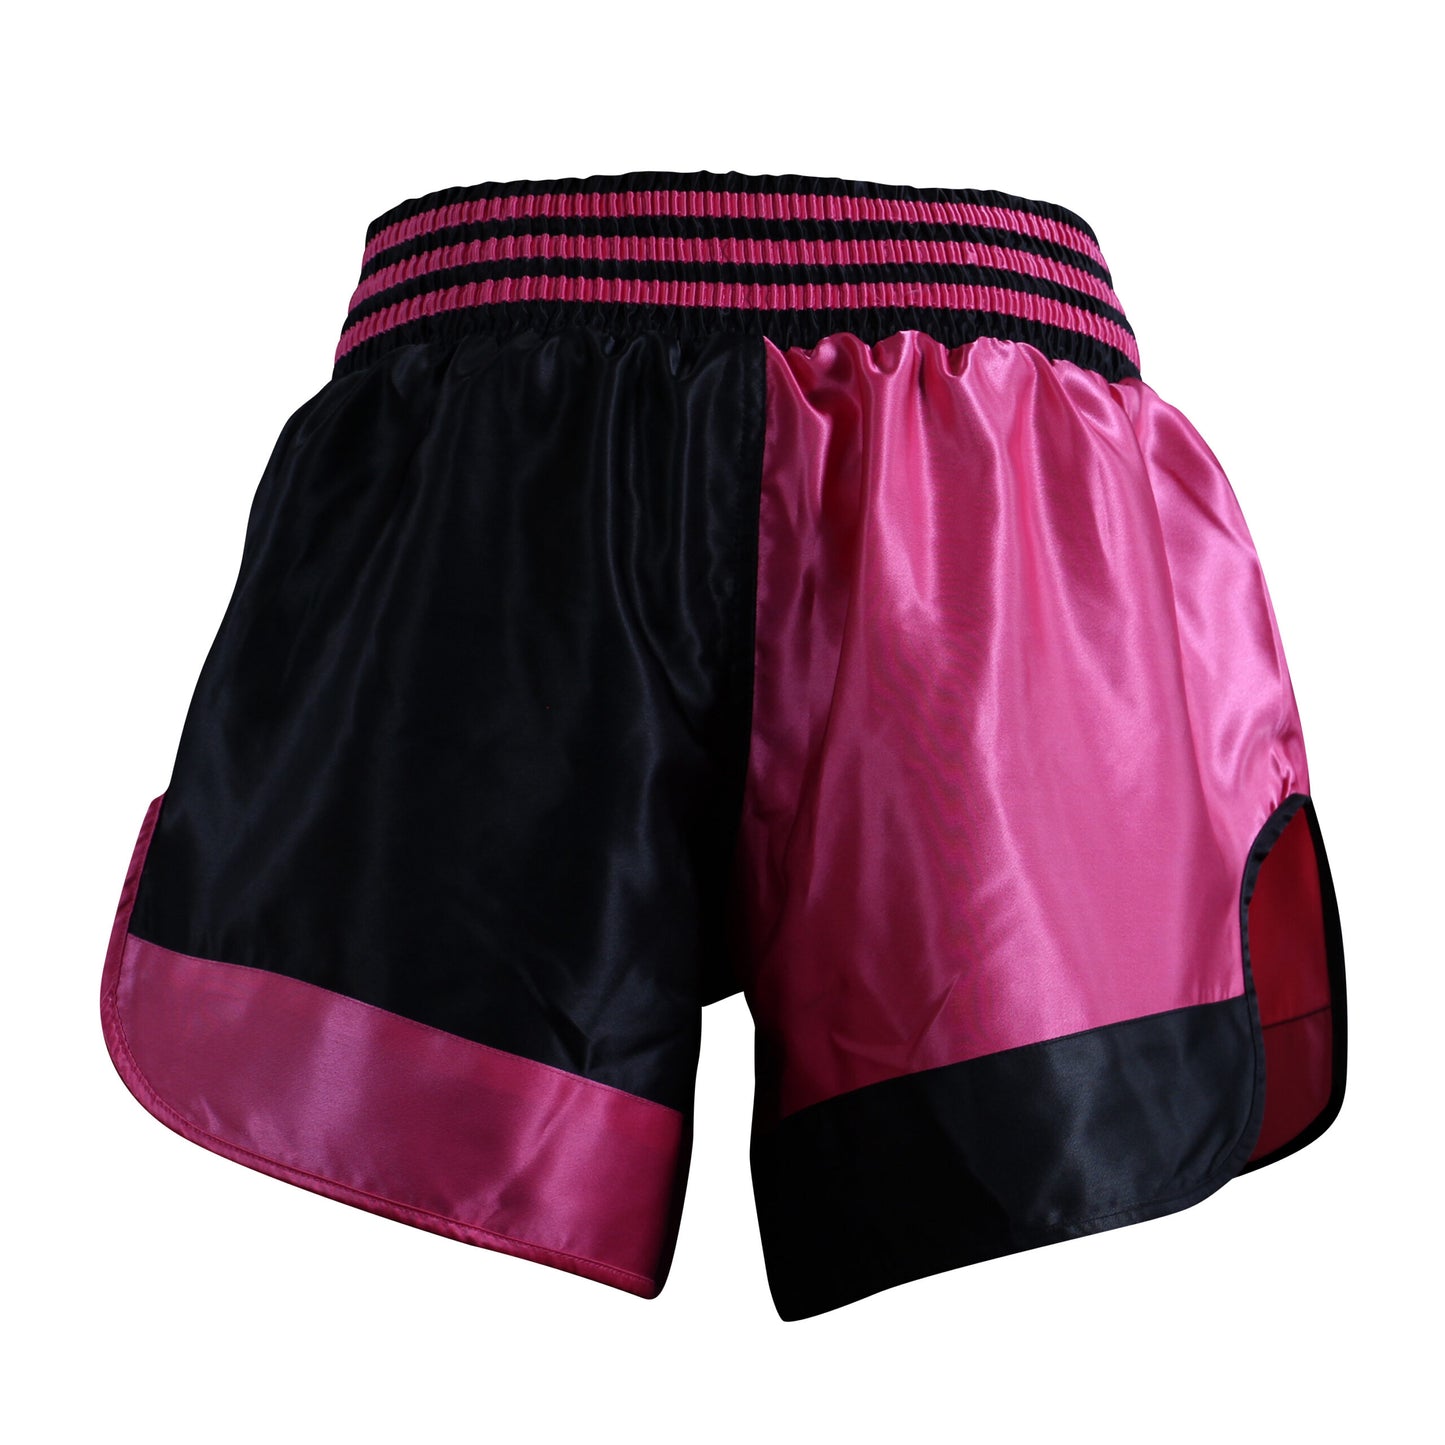 Adisth03 Adidas Muay Thai Boxing Shorts Pink Black 02